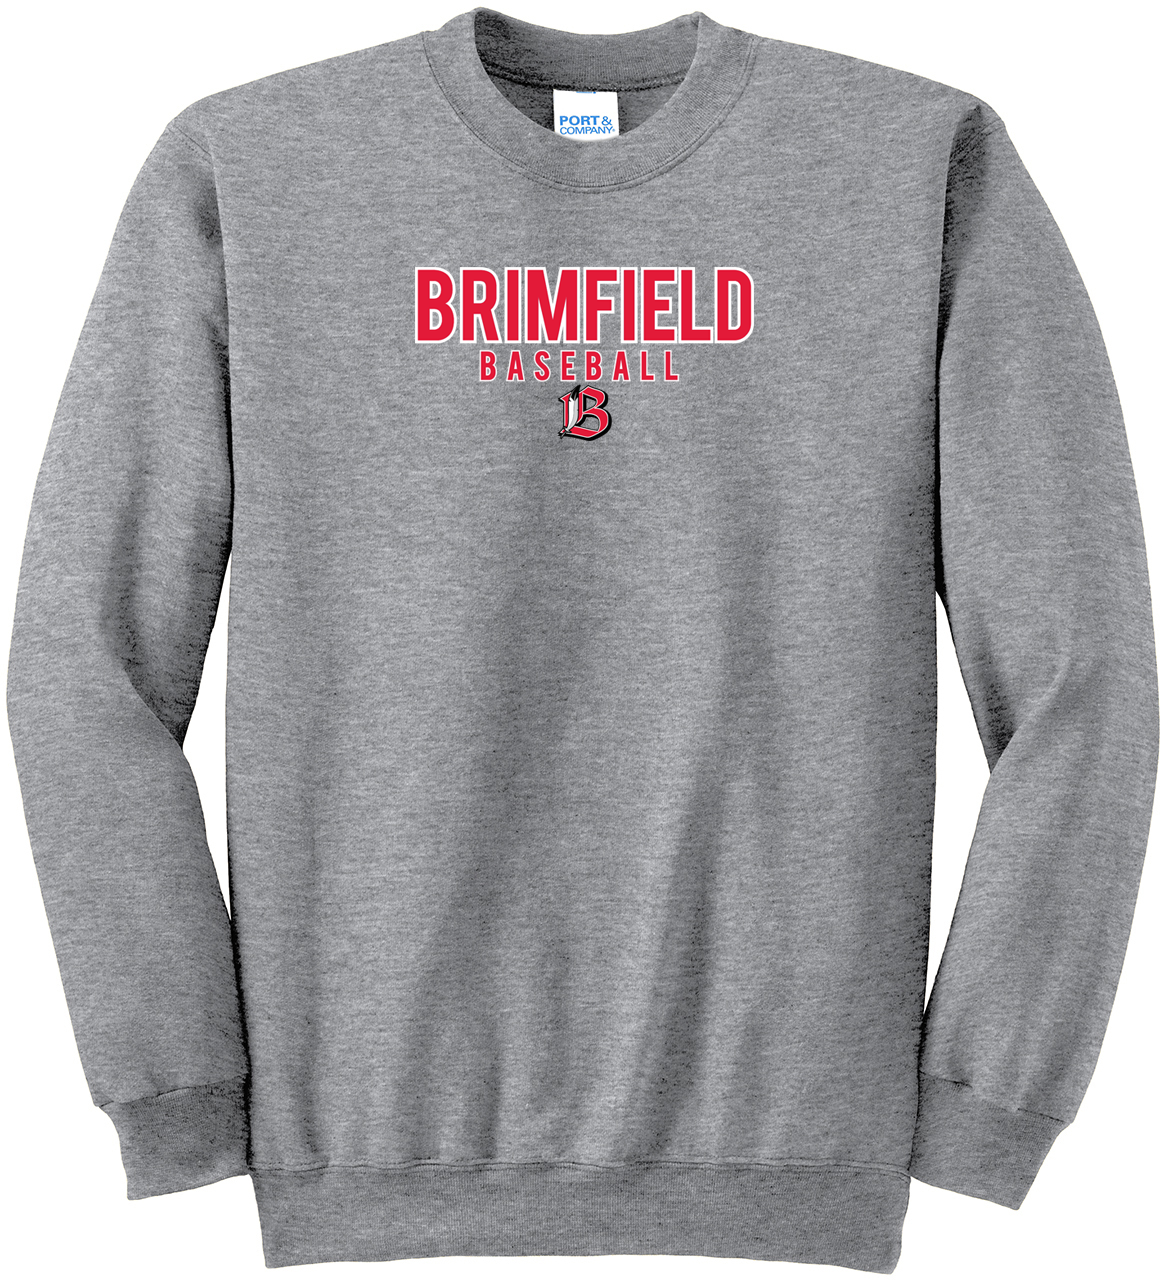 Brimfield Crew Neck Sweater